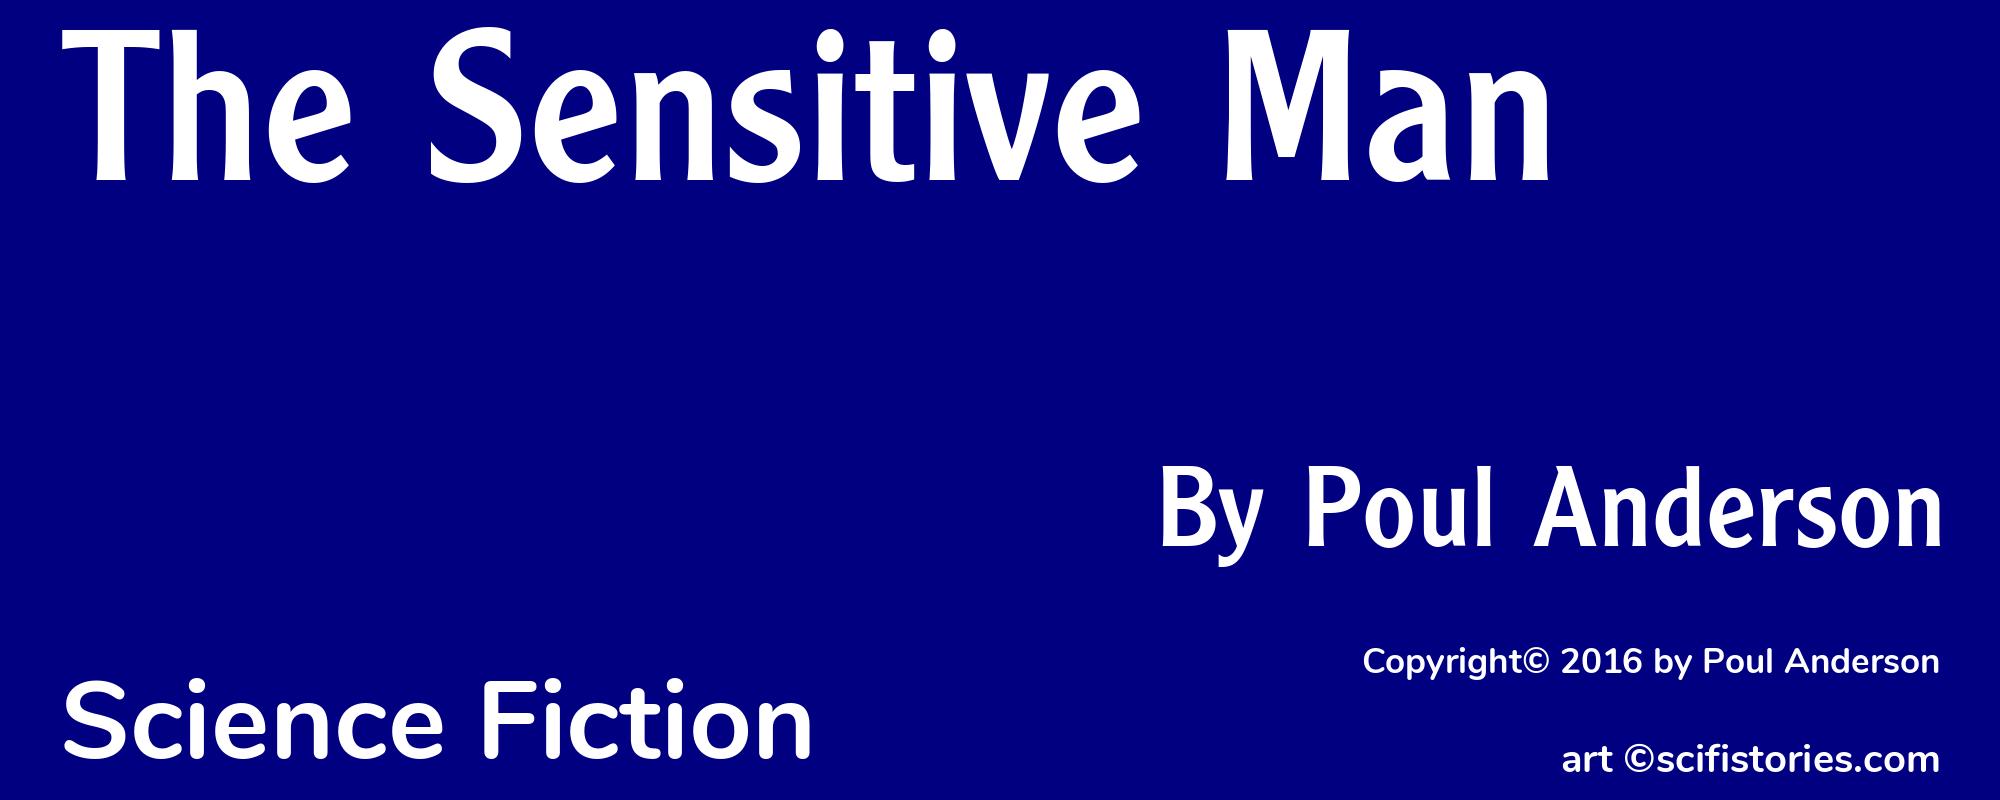 The Sensitive Man - Cover